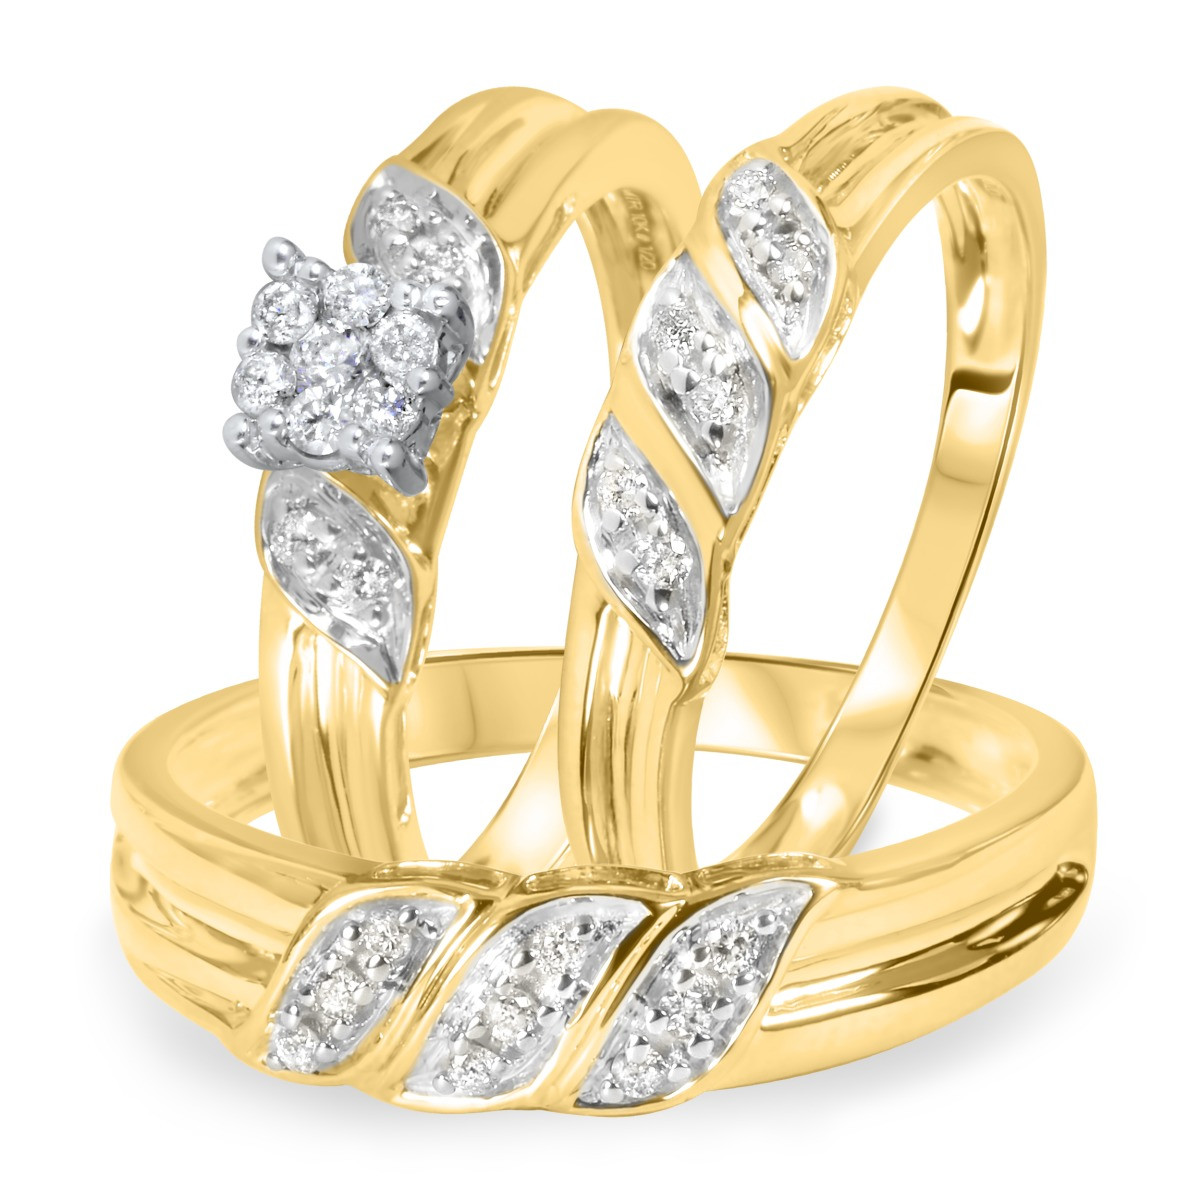 Trio Wedding Ring Sets
 1 4 Carat Diamond Trio Wedding Ring Set 14K Yellow Gold